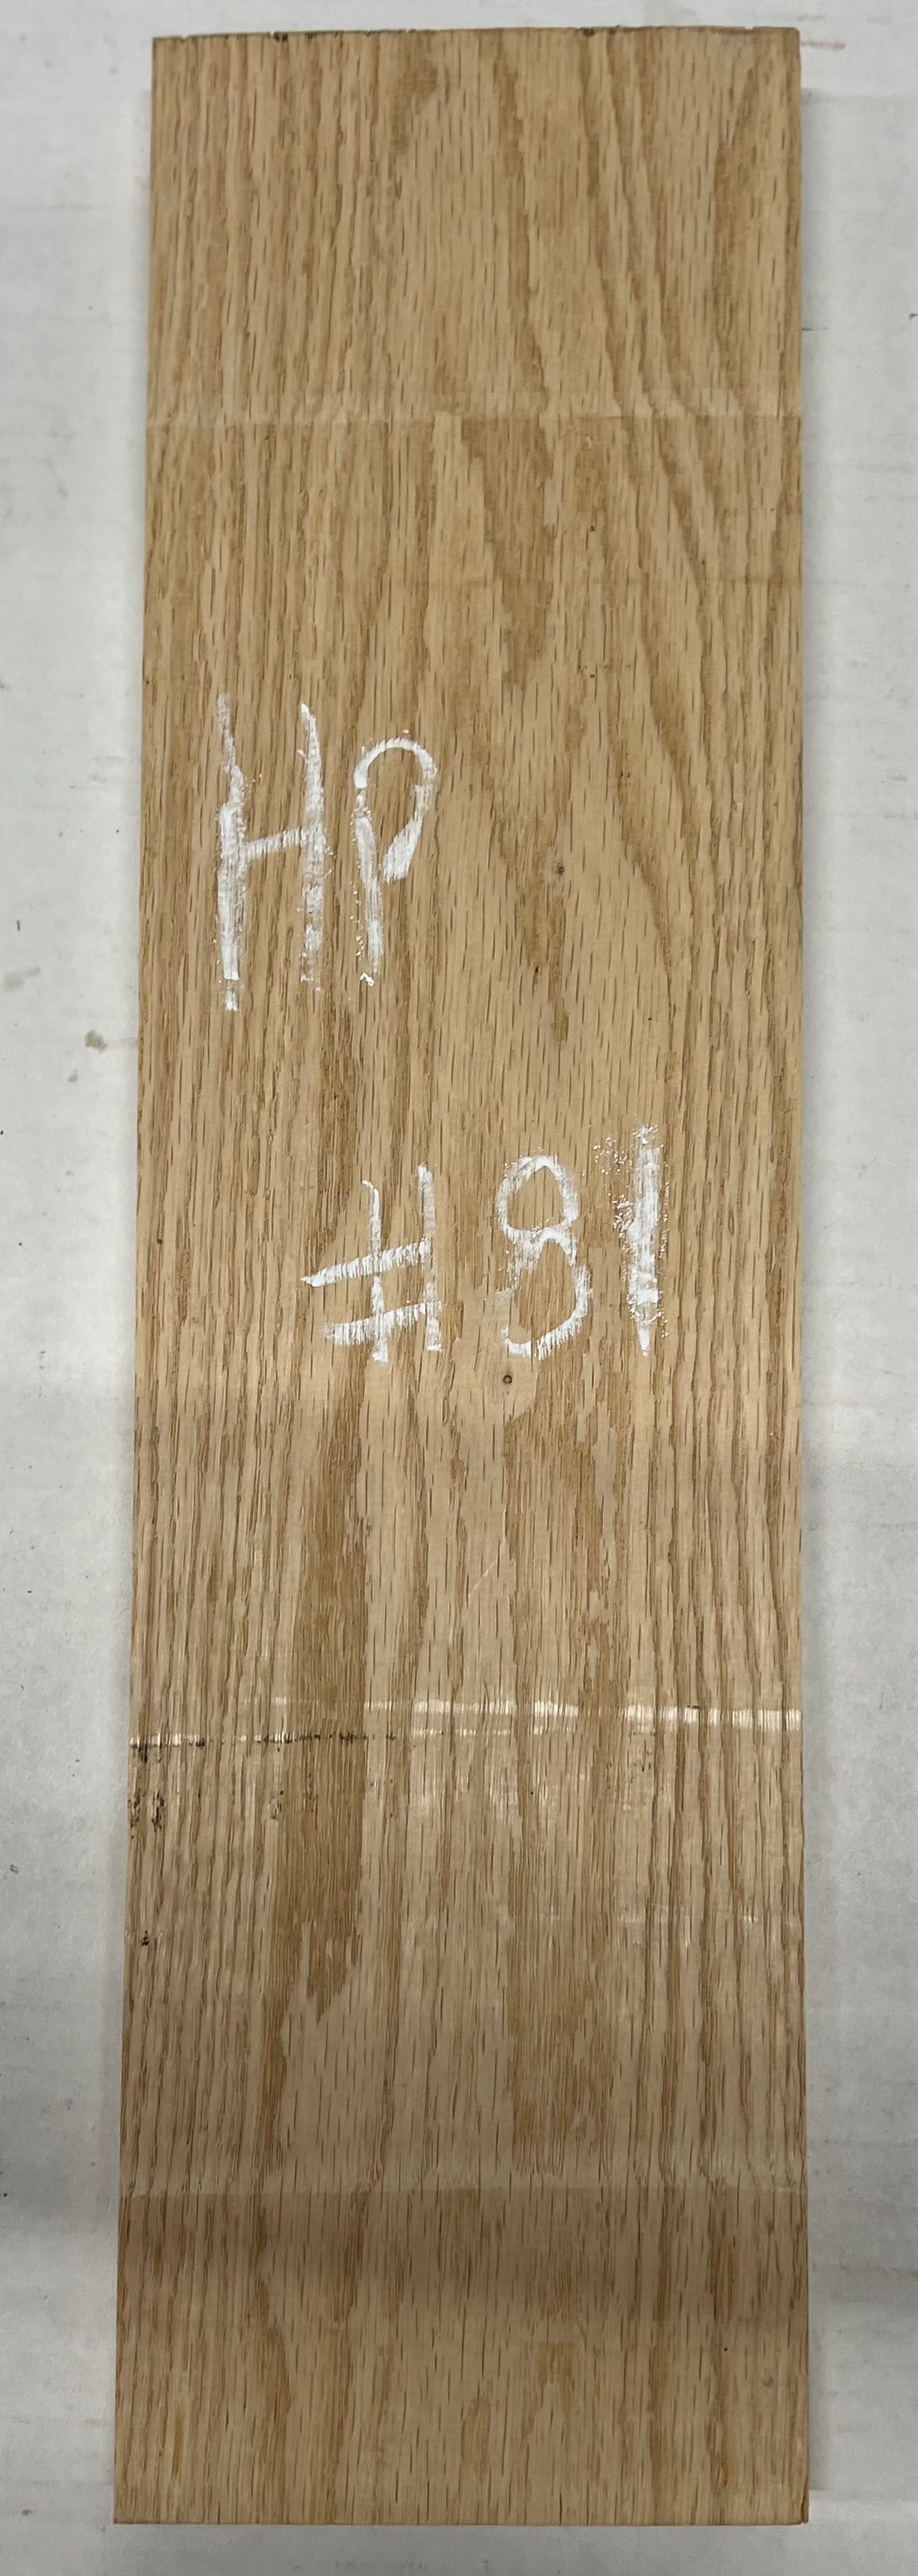 Red Oak Thin Stock Three Dimensional Lumber Board 21&quot;x5-1/2&quot;x7/8&quot; 